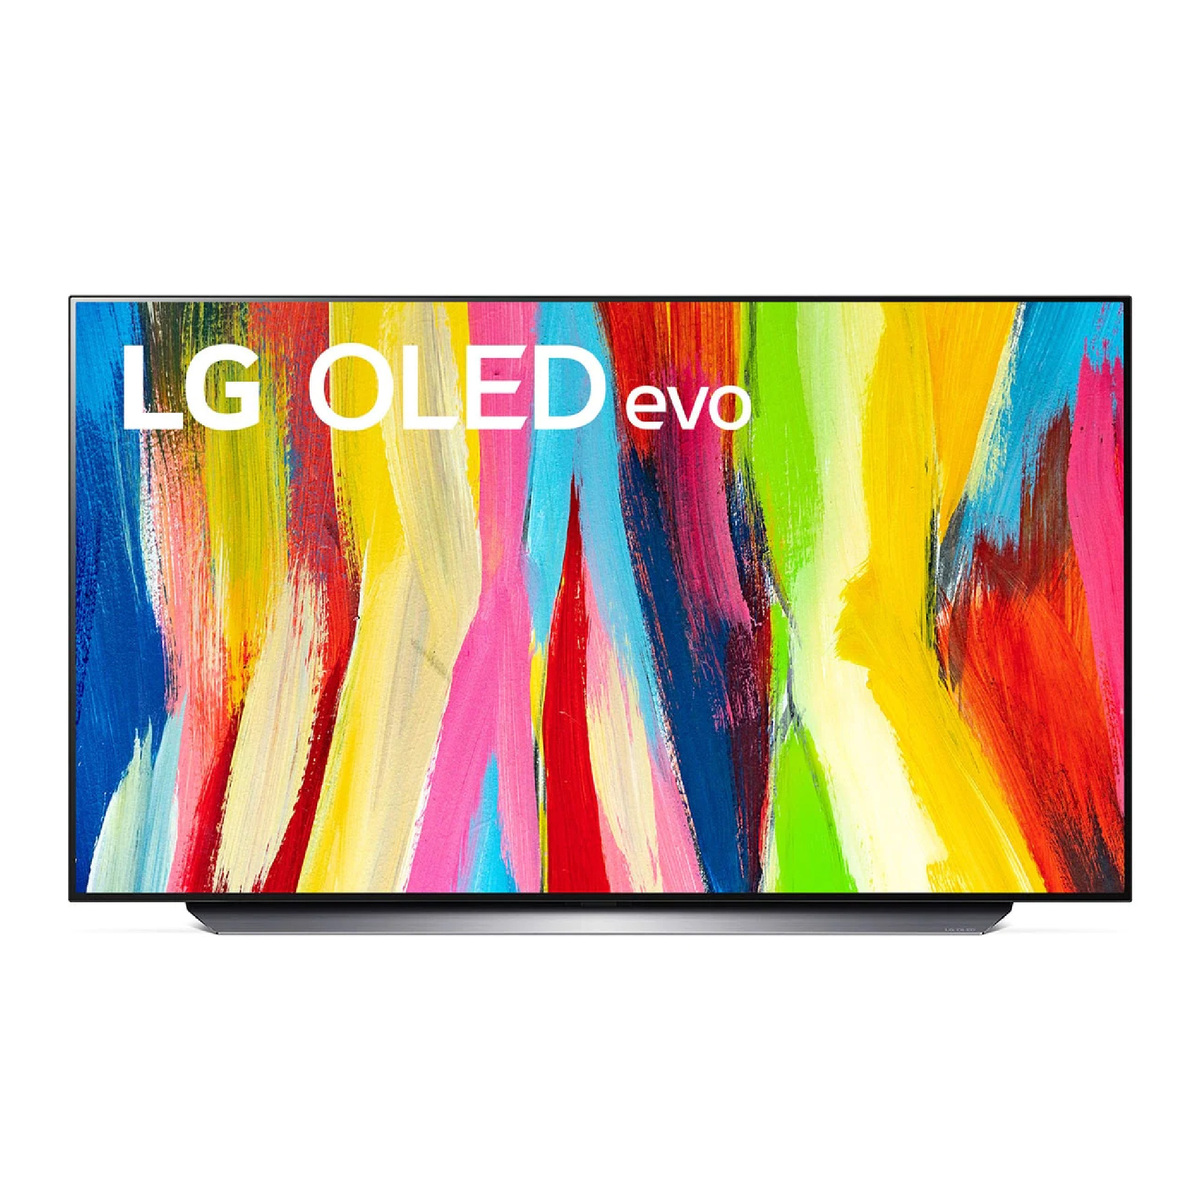 LG 4K OLED Smart TV 48 inch Series C2, a9 Gen5 4K Processor, G-Sync & FreeSync for gaming